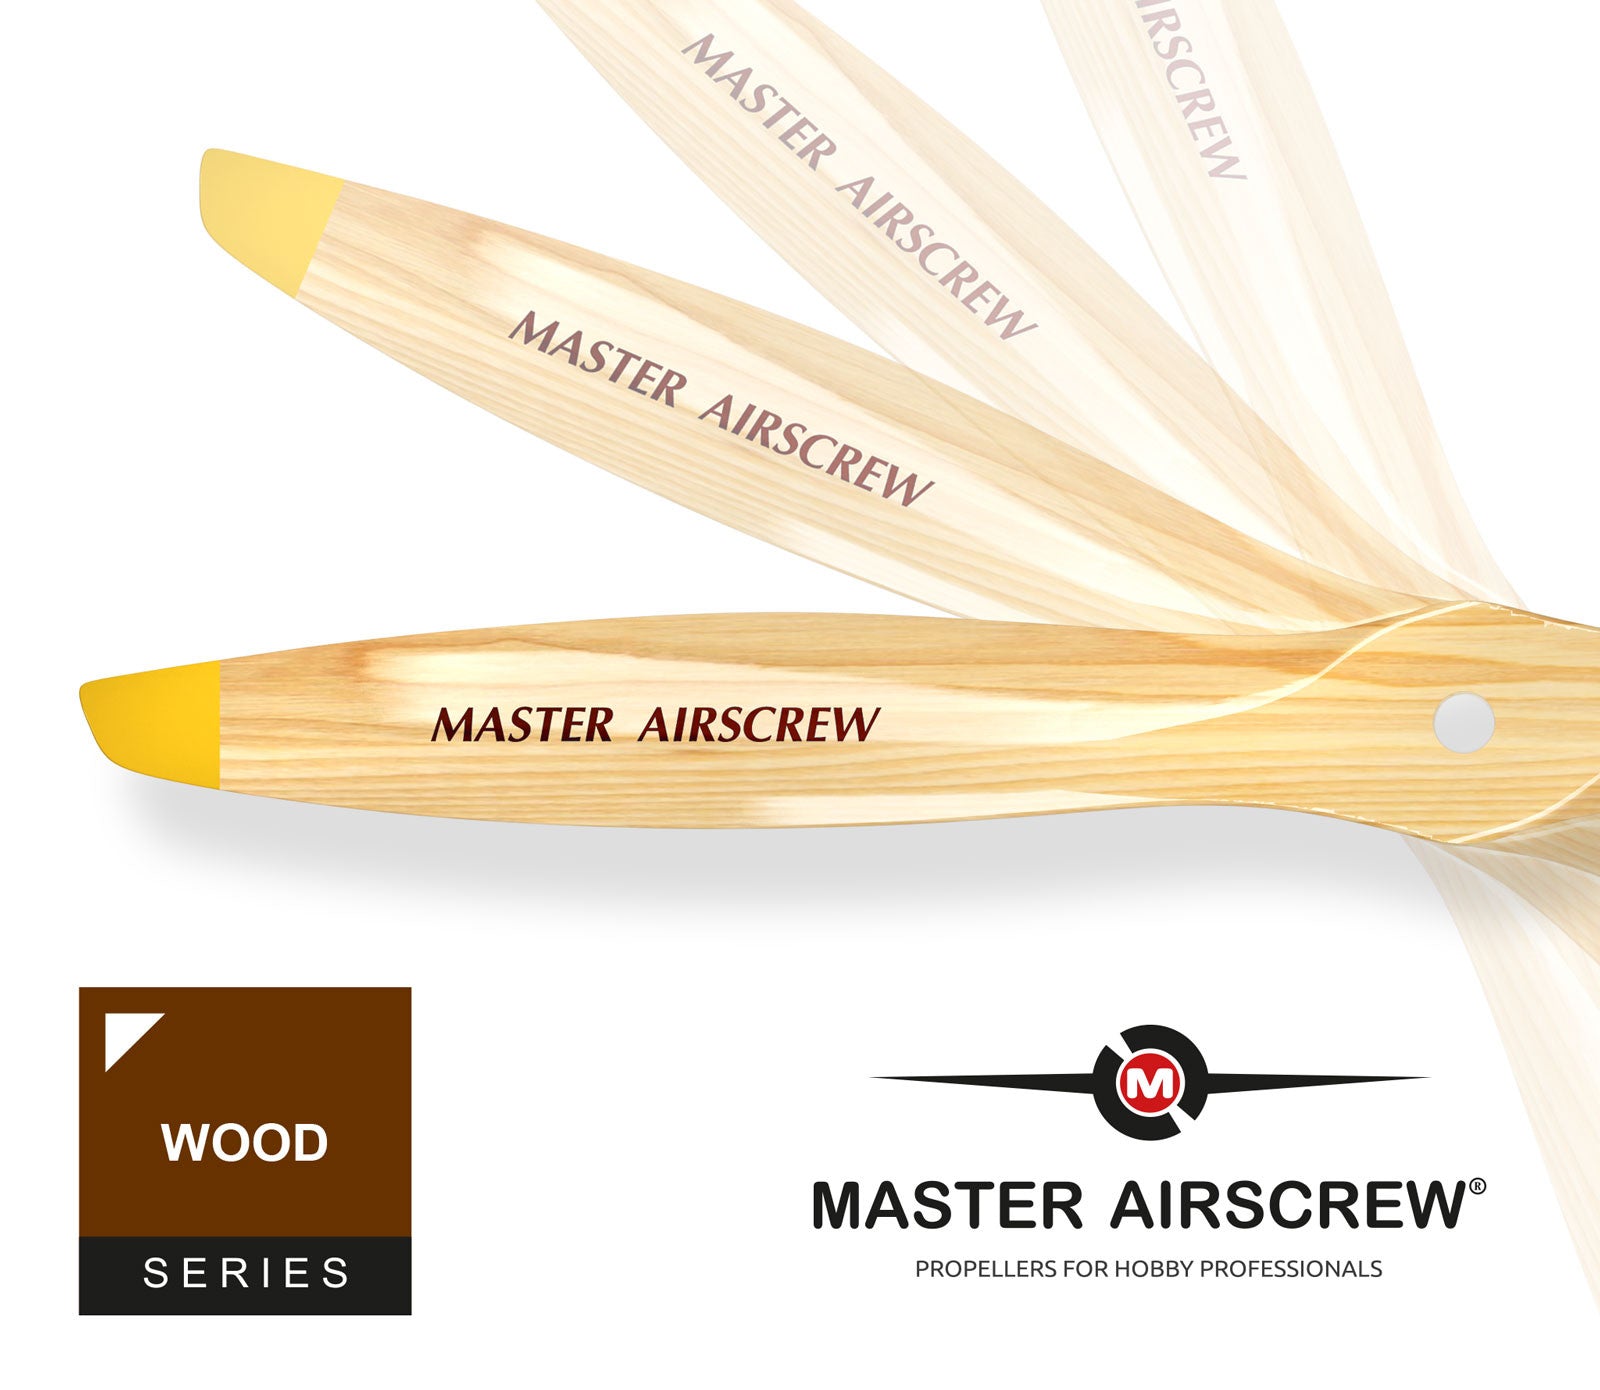 Wood-Maple - 18x8 Propeller - Master Airscrew